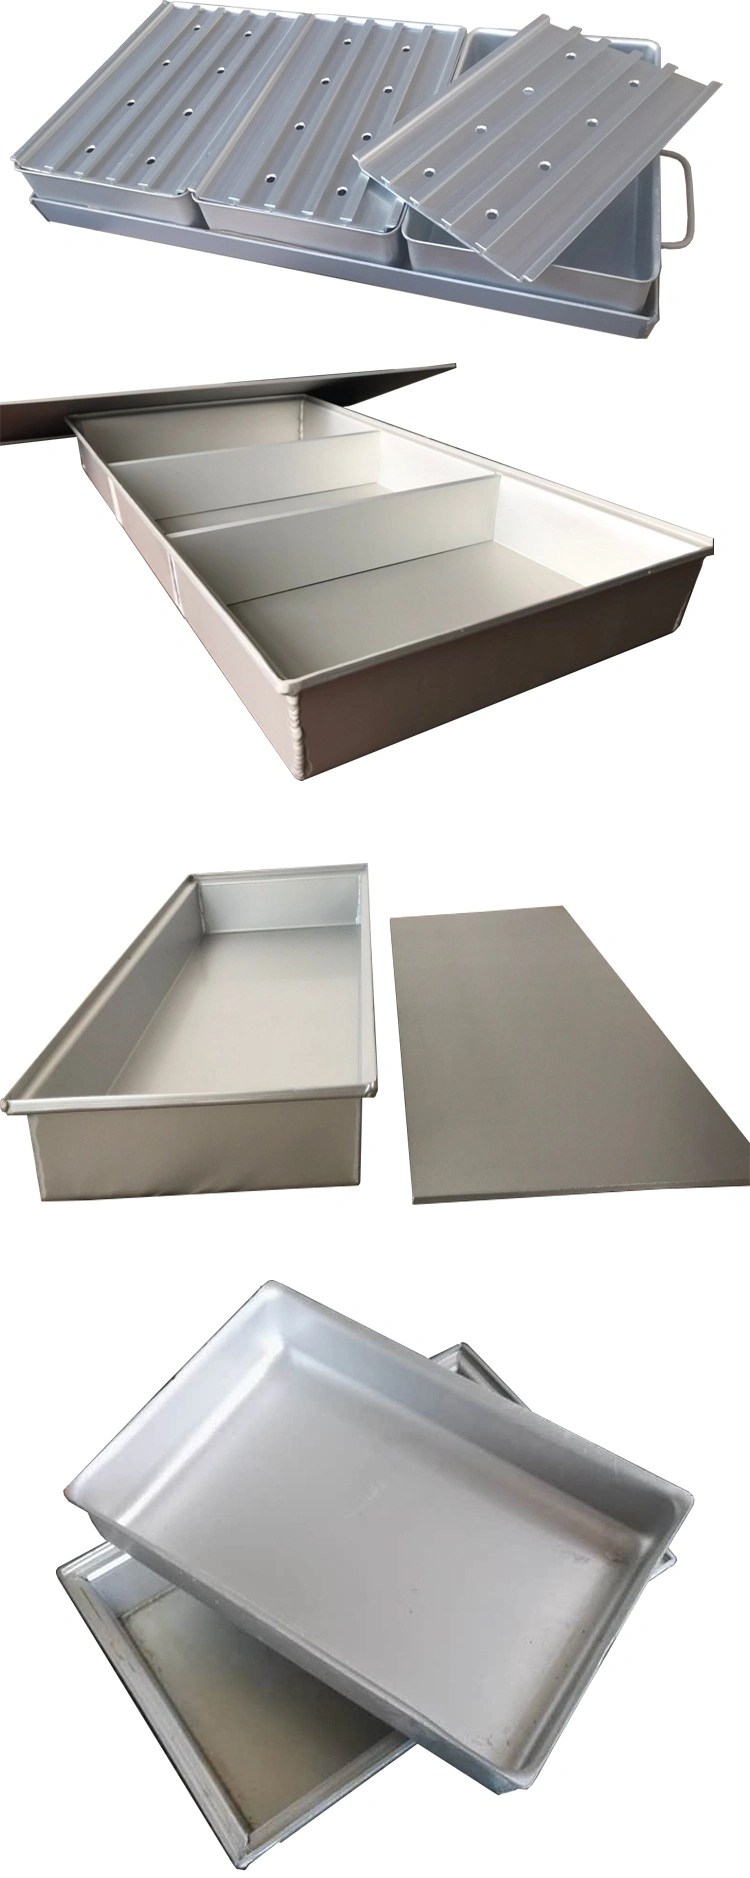 Custom Size Anodised Large Size Nesting Tray Baking Pan Drying Freezer Sheet Pan with Angled Brim